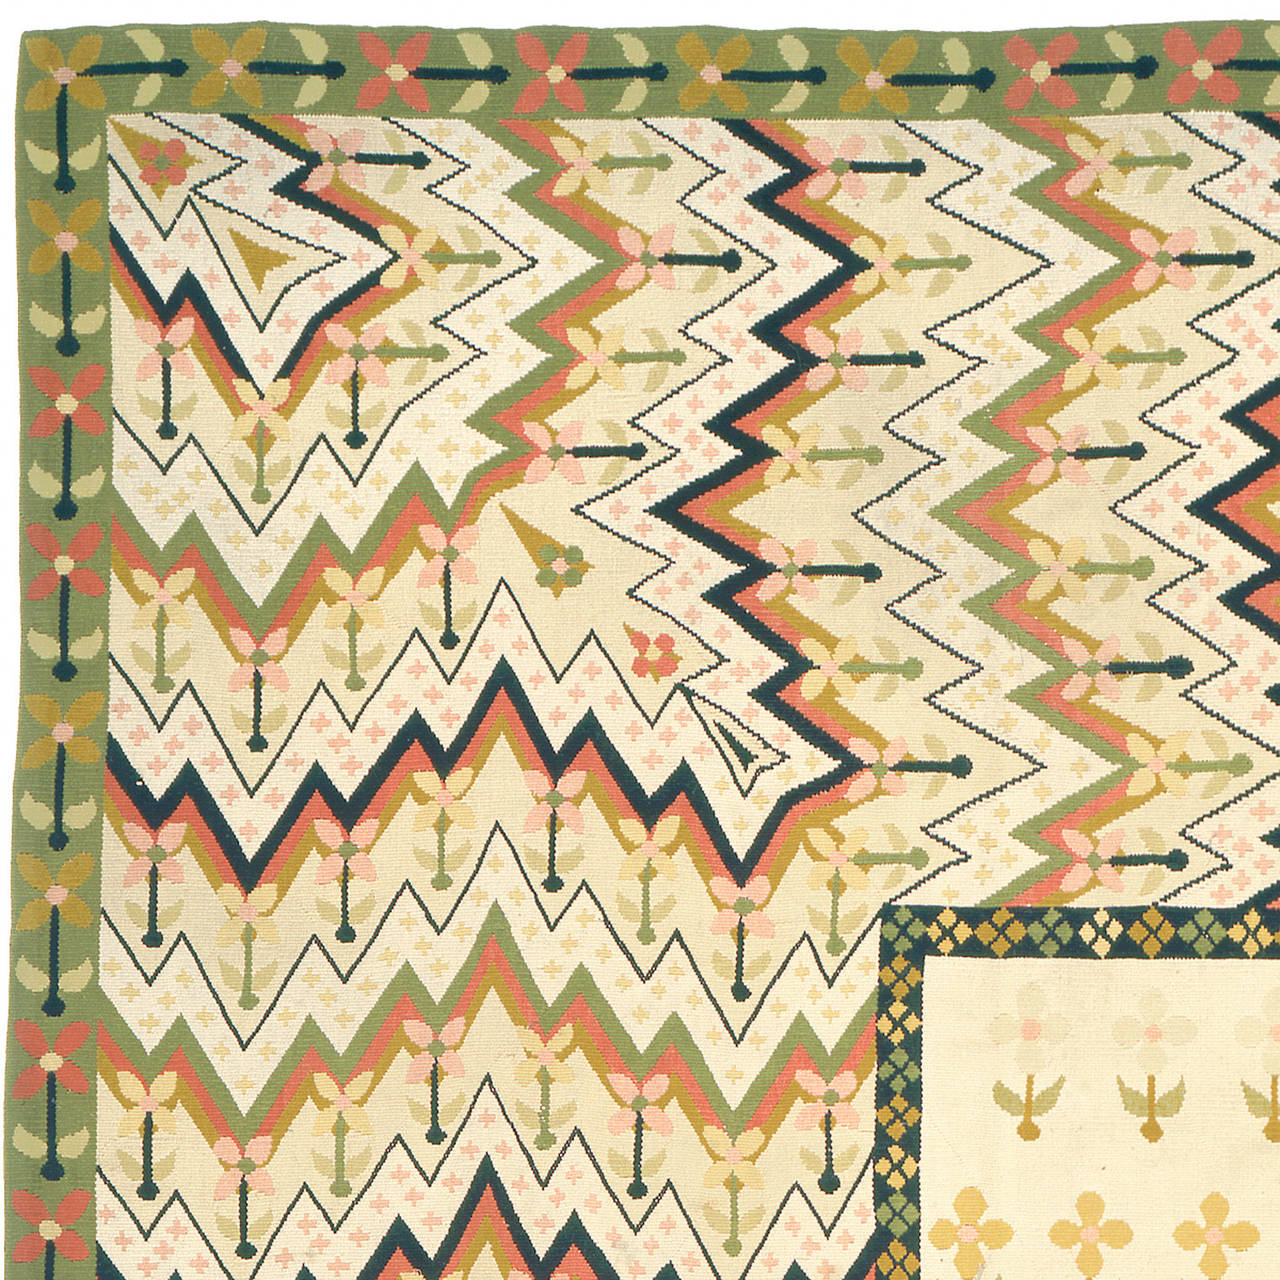 20th Century French Aubusson Carpet
France, circa 1920
Aubusson, Flat-weave